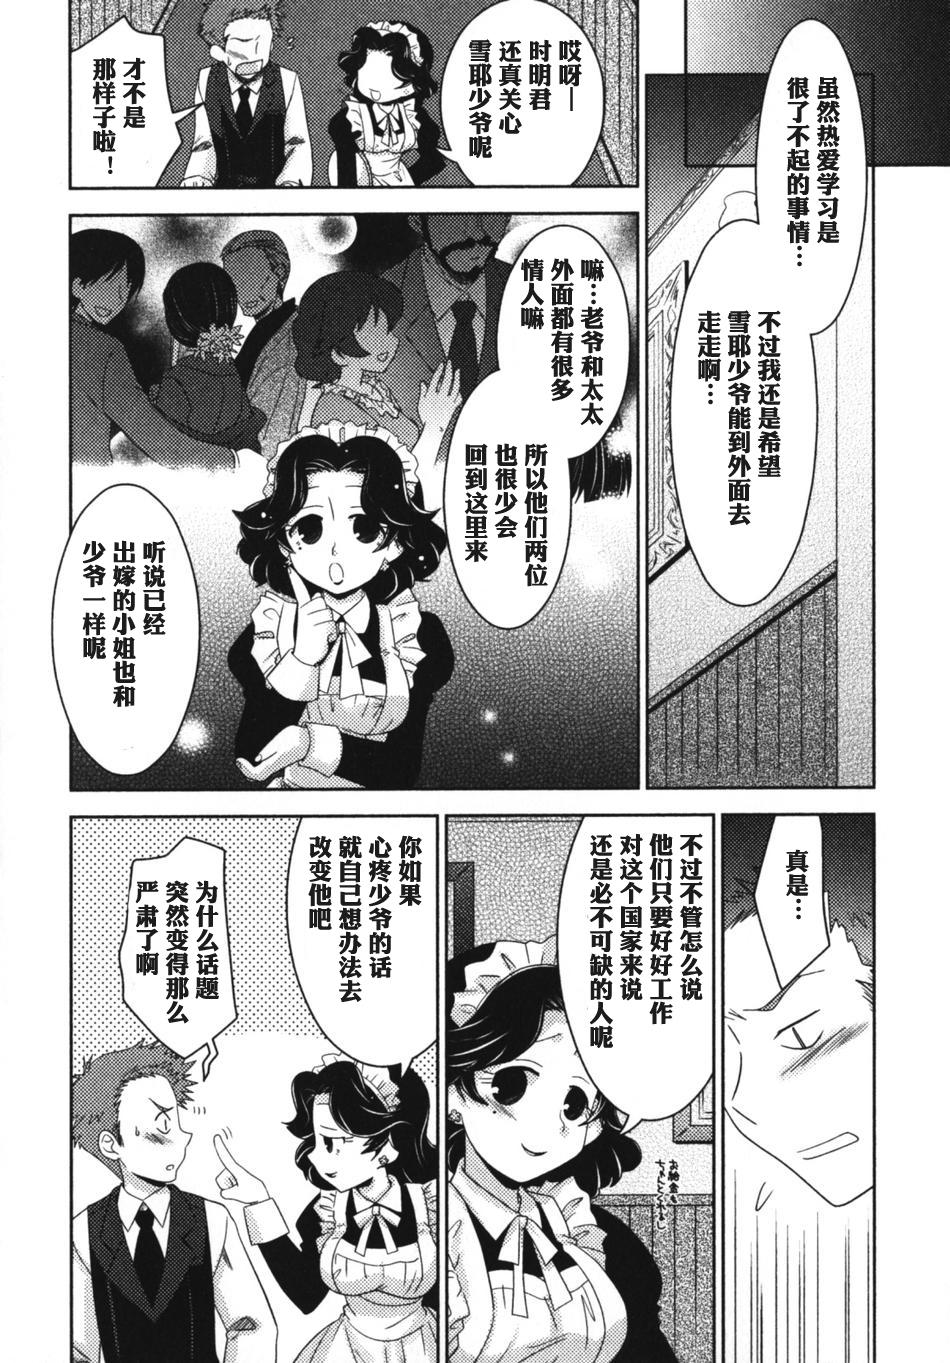 Female Nee, Kotchi wo Muite, Soredemo Mada Kimi wa Rica - Page 2